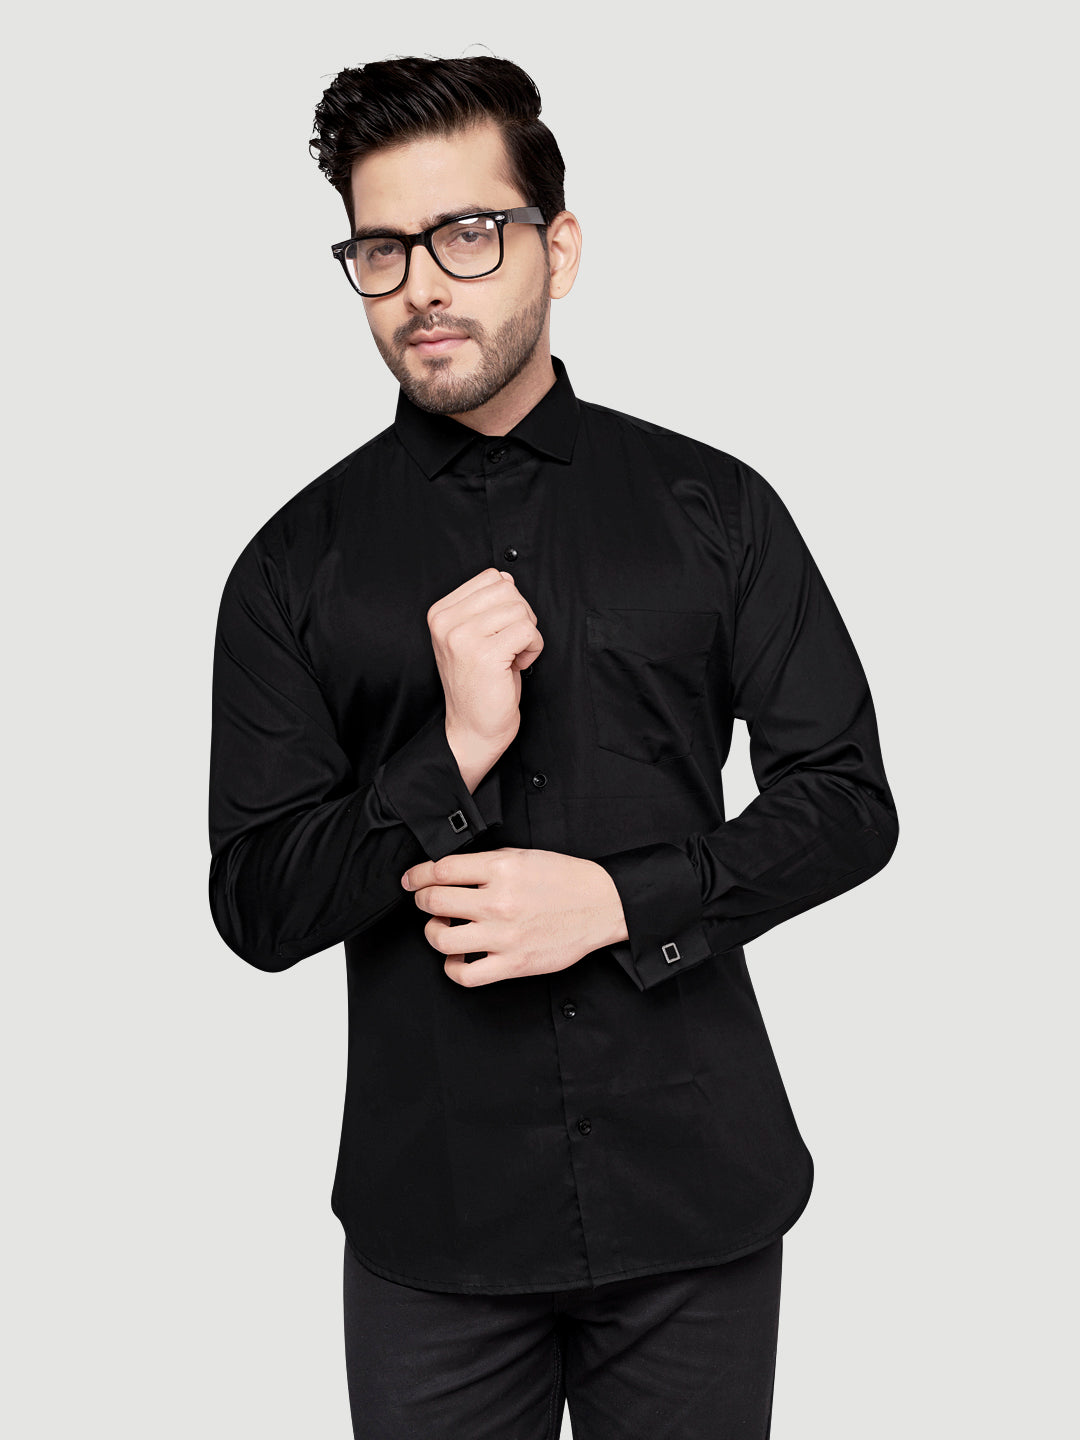 Black and White Shirts Men's Formal Cufflink Shirt Black w/o bow